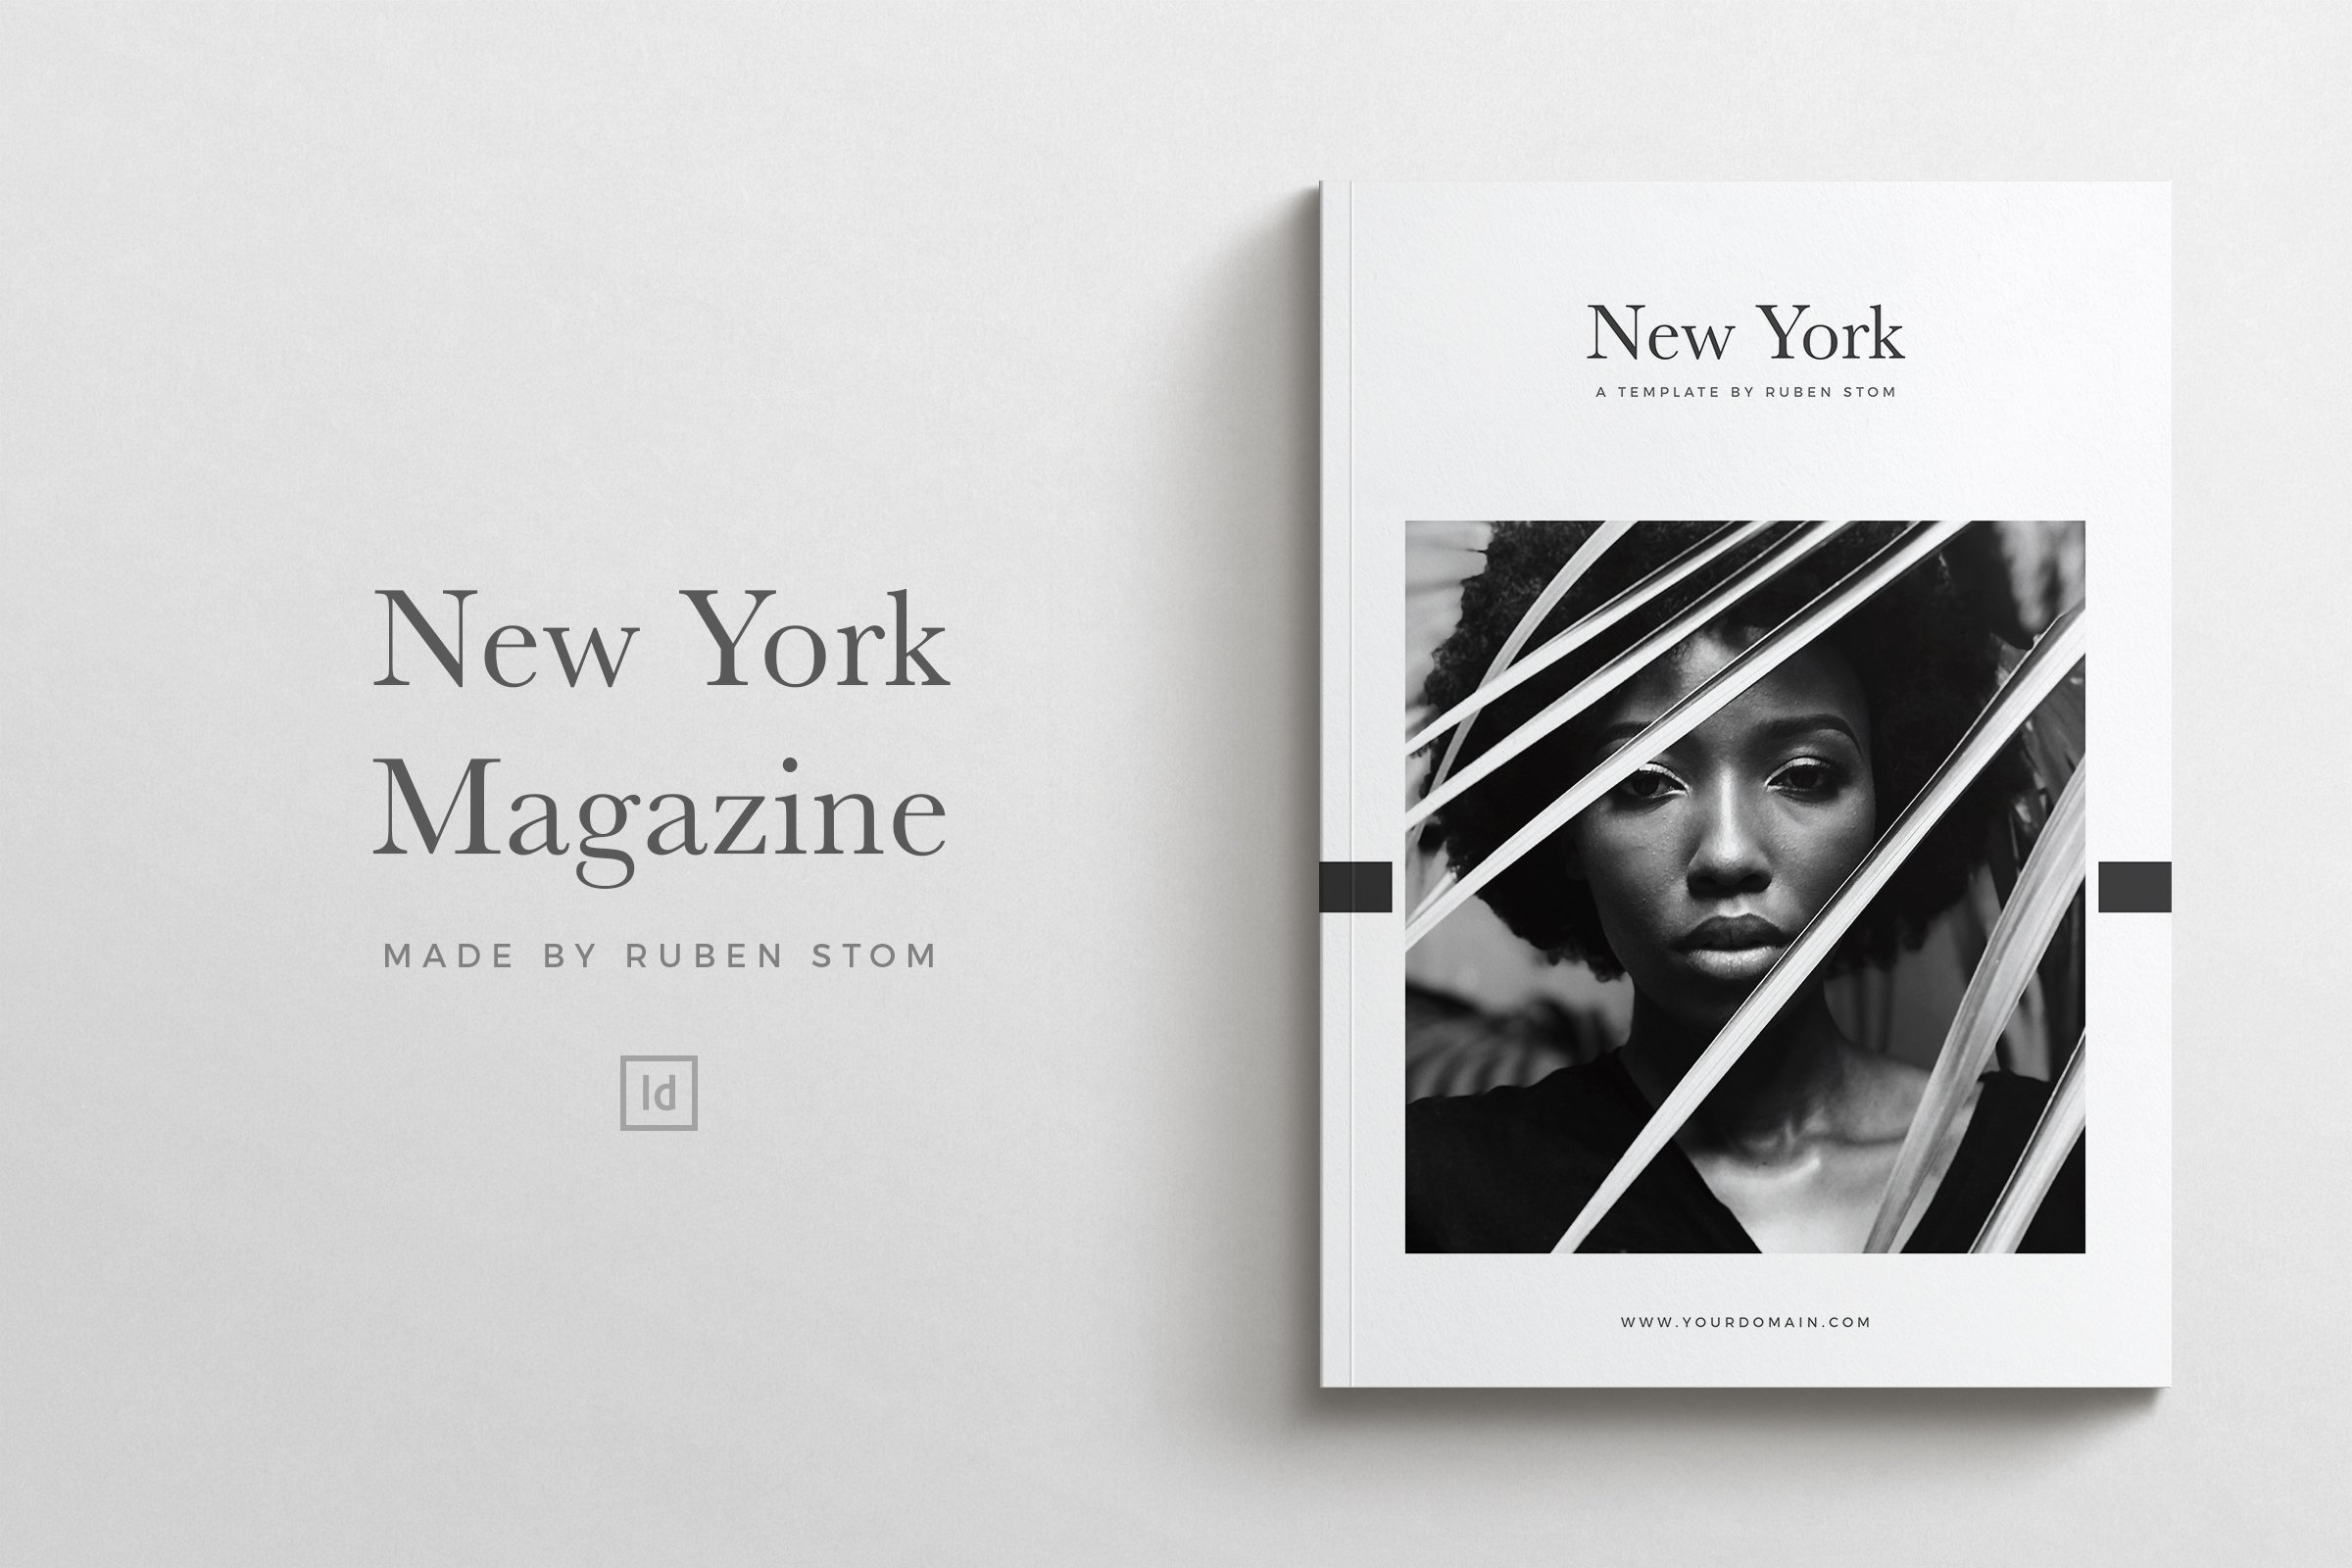 New York Magazine cover image.